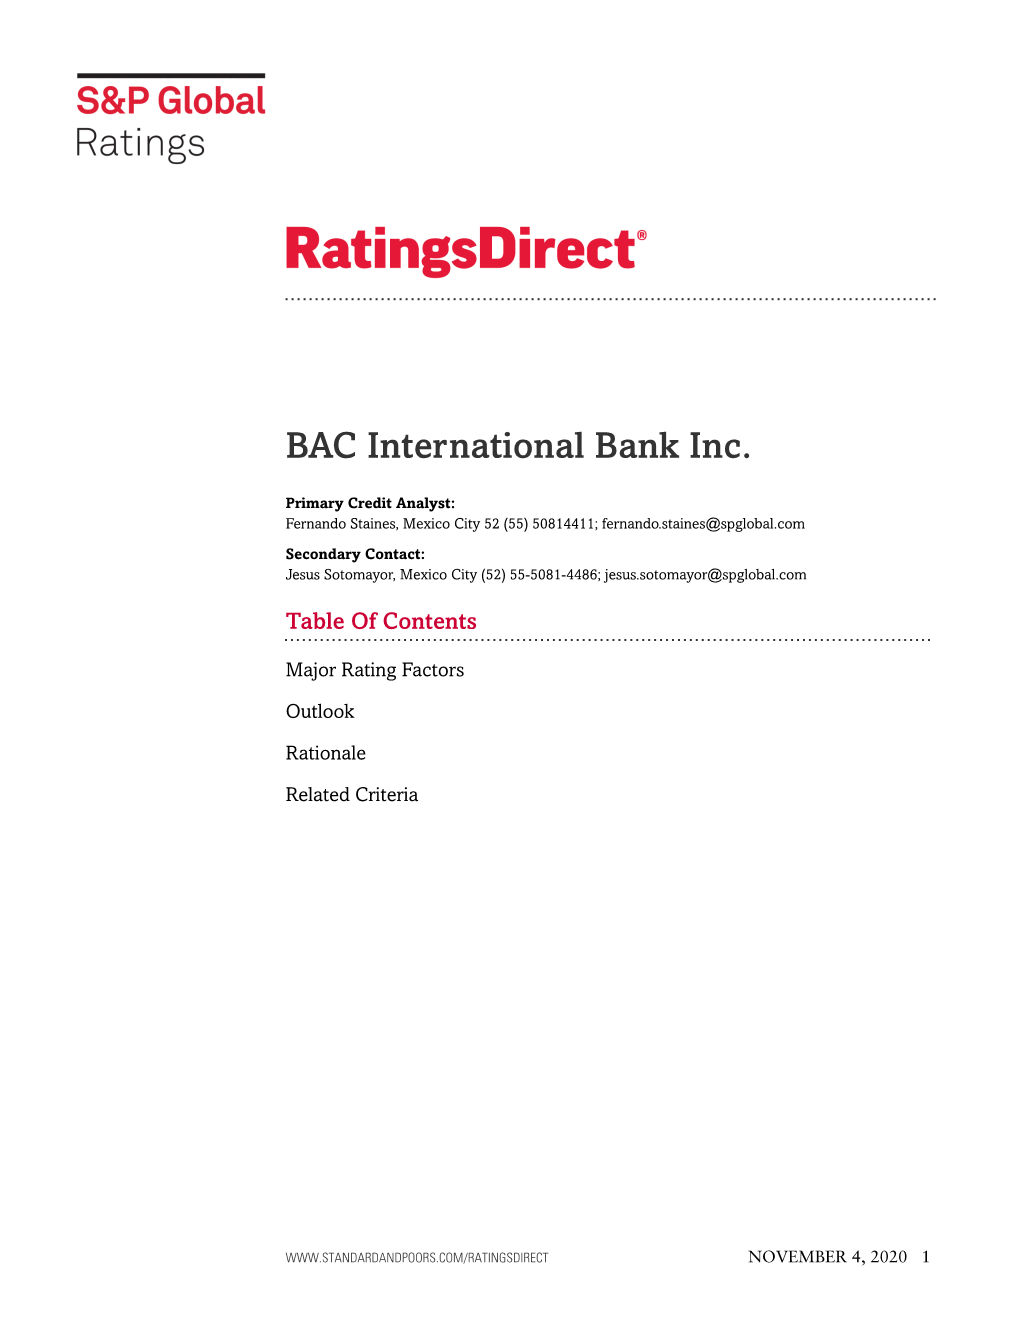 BAC International Bank Inc